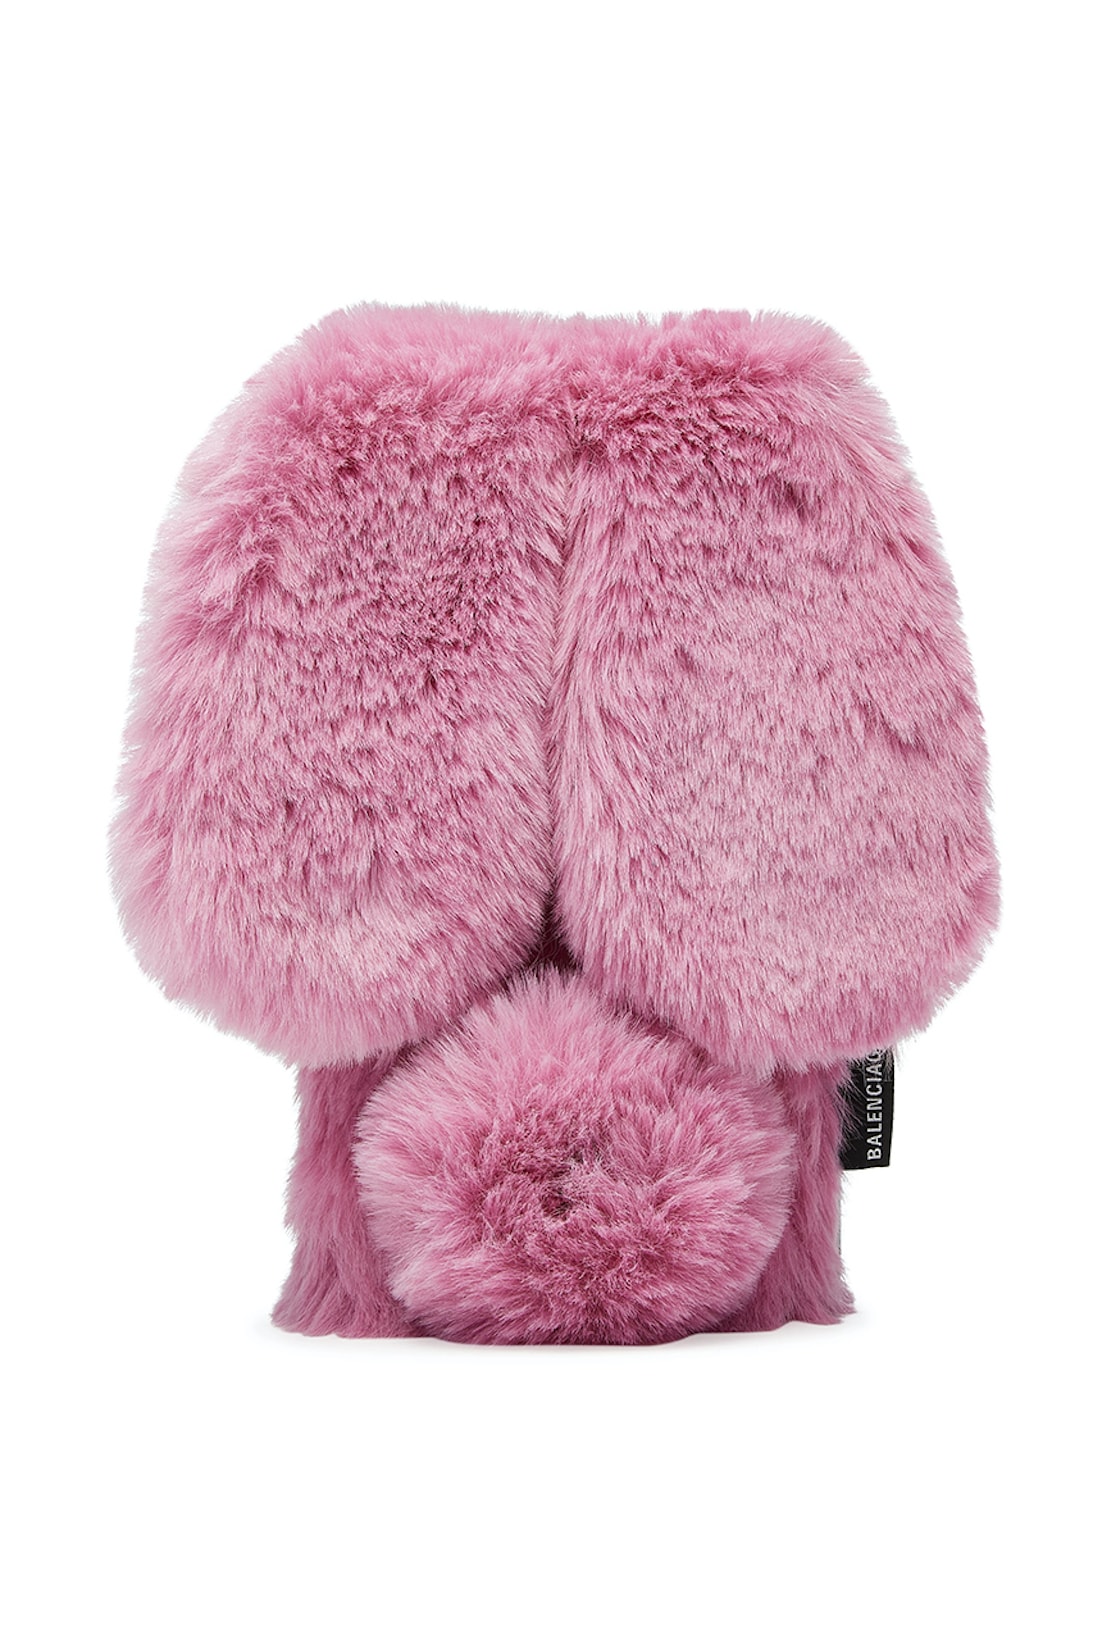 Balenciaga Pink Bunny Apple iPhone Cases Faux Fur